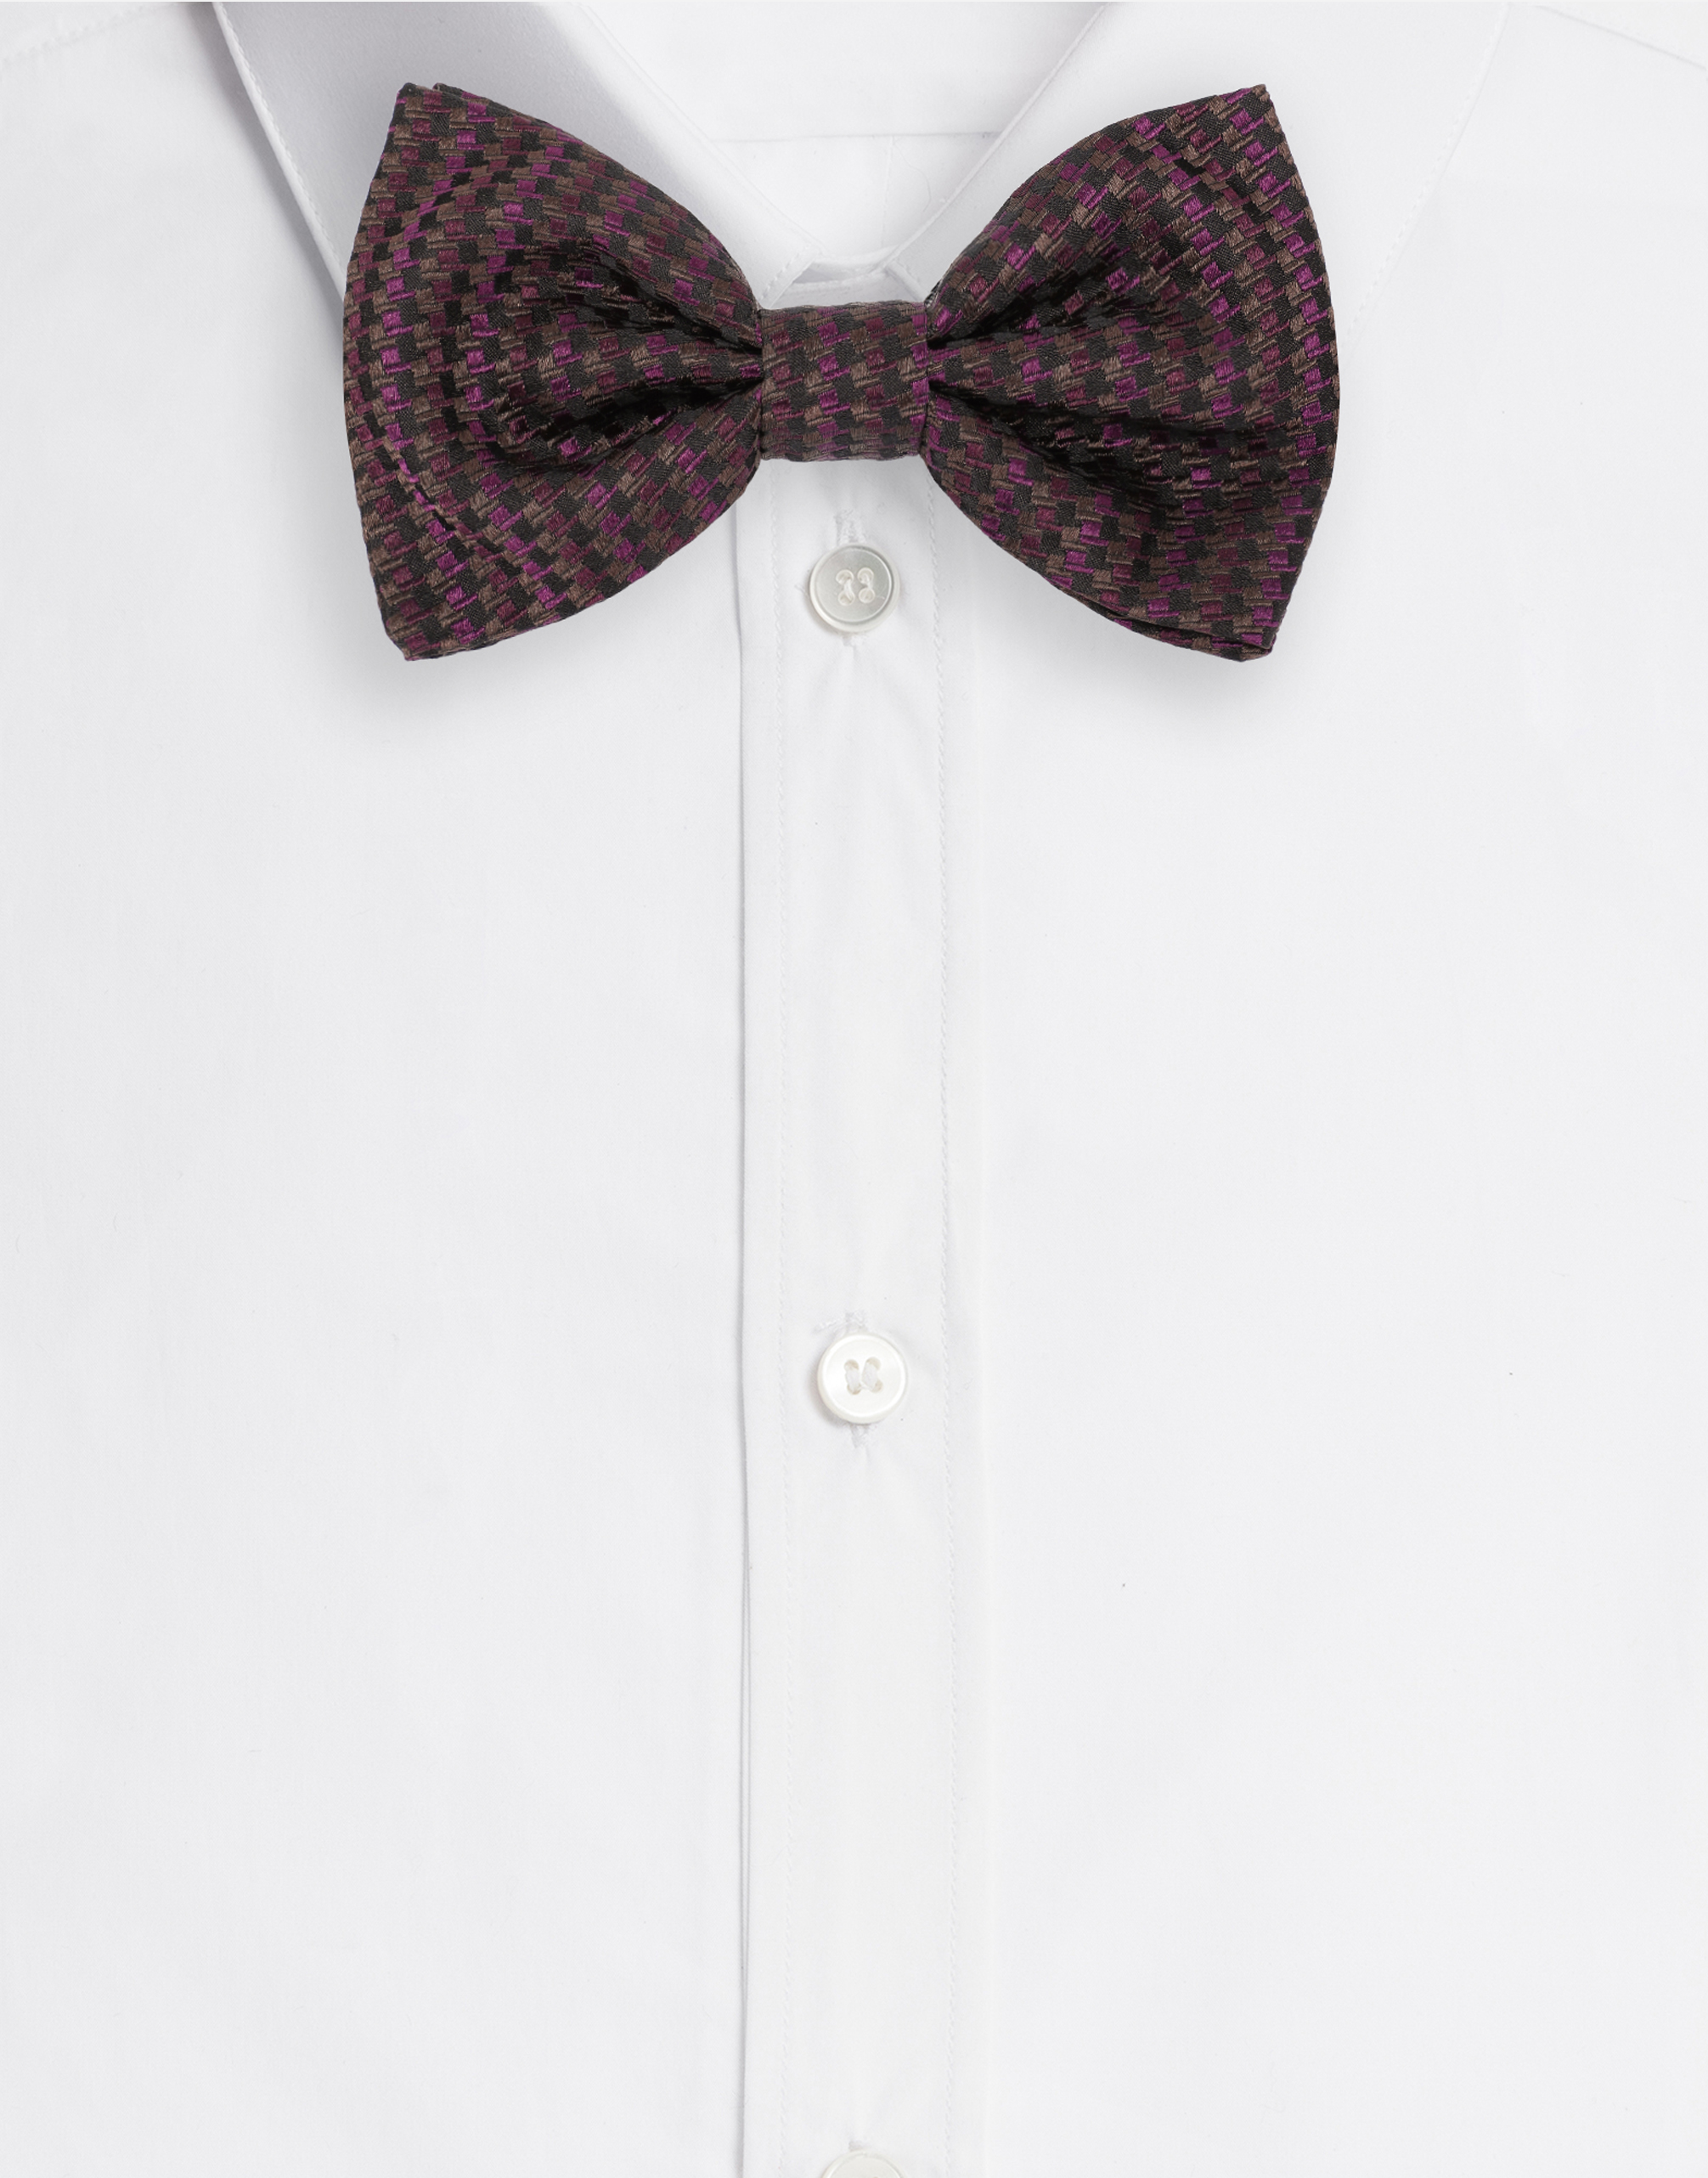 Tie-print silk jacquard bow tie in Bordeaux